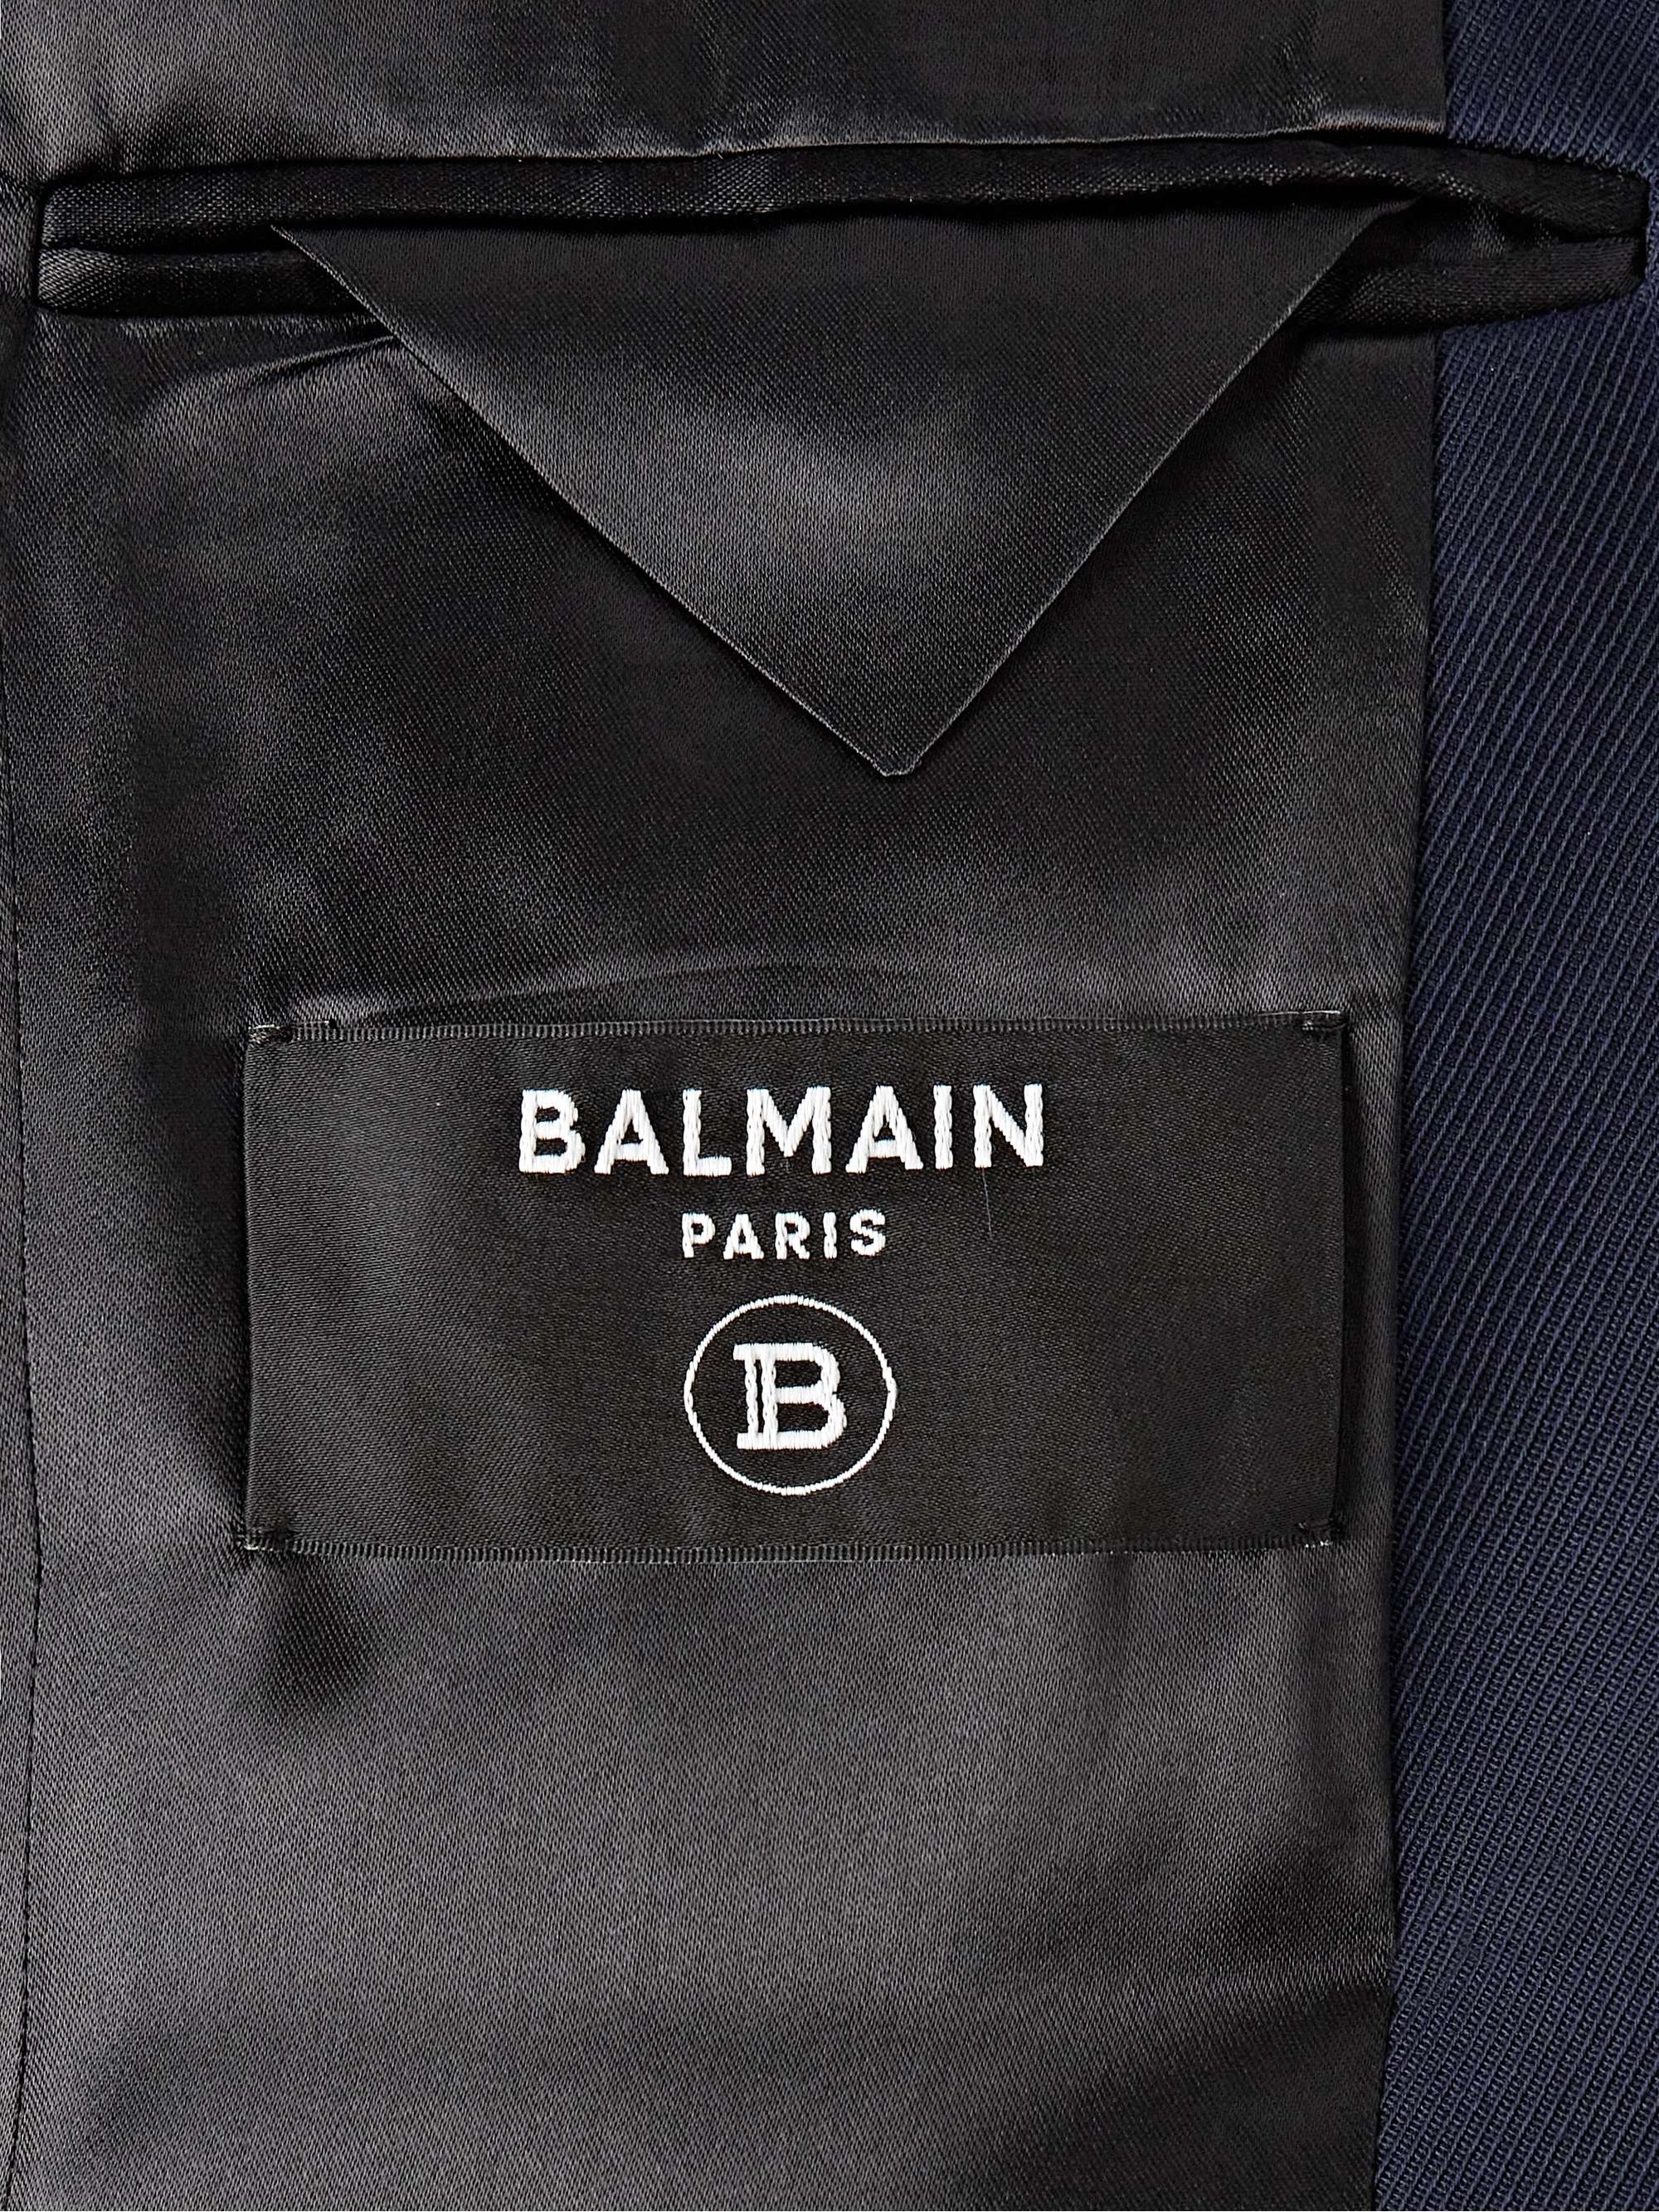 BALMAIN Slim-Fit Button-Embellished Wool-Twill Blazer for Men | MR PORTER